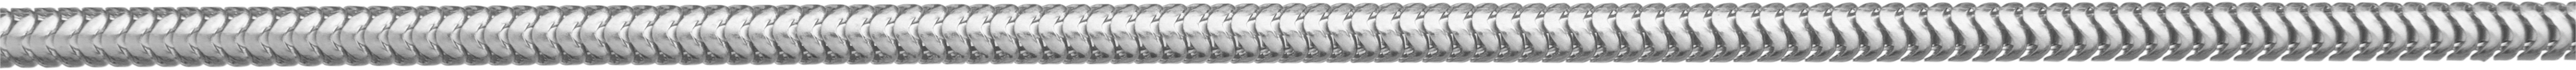 Snake chain silver 925/- Ø 2,40mm